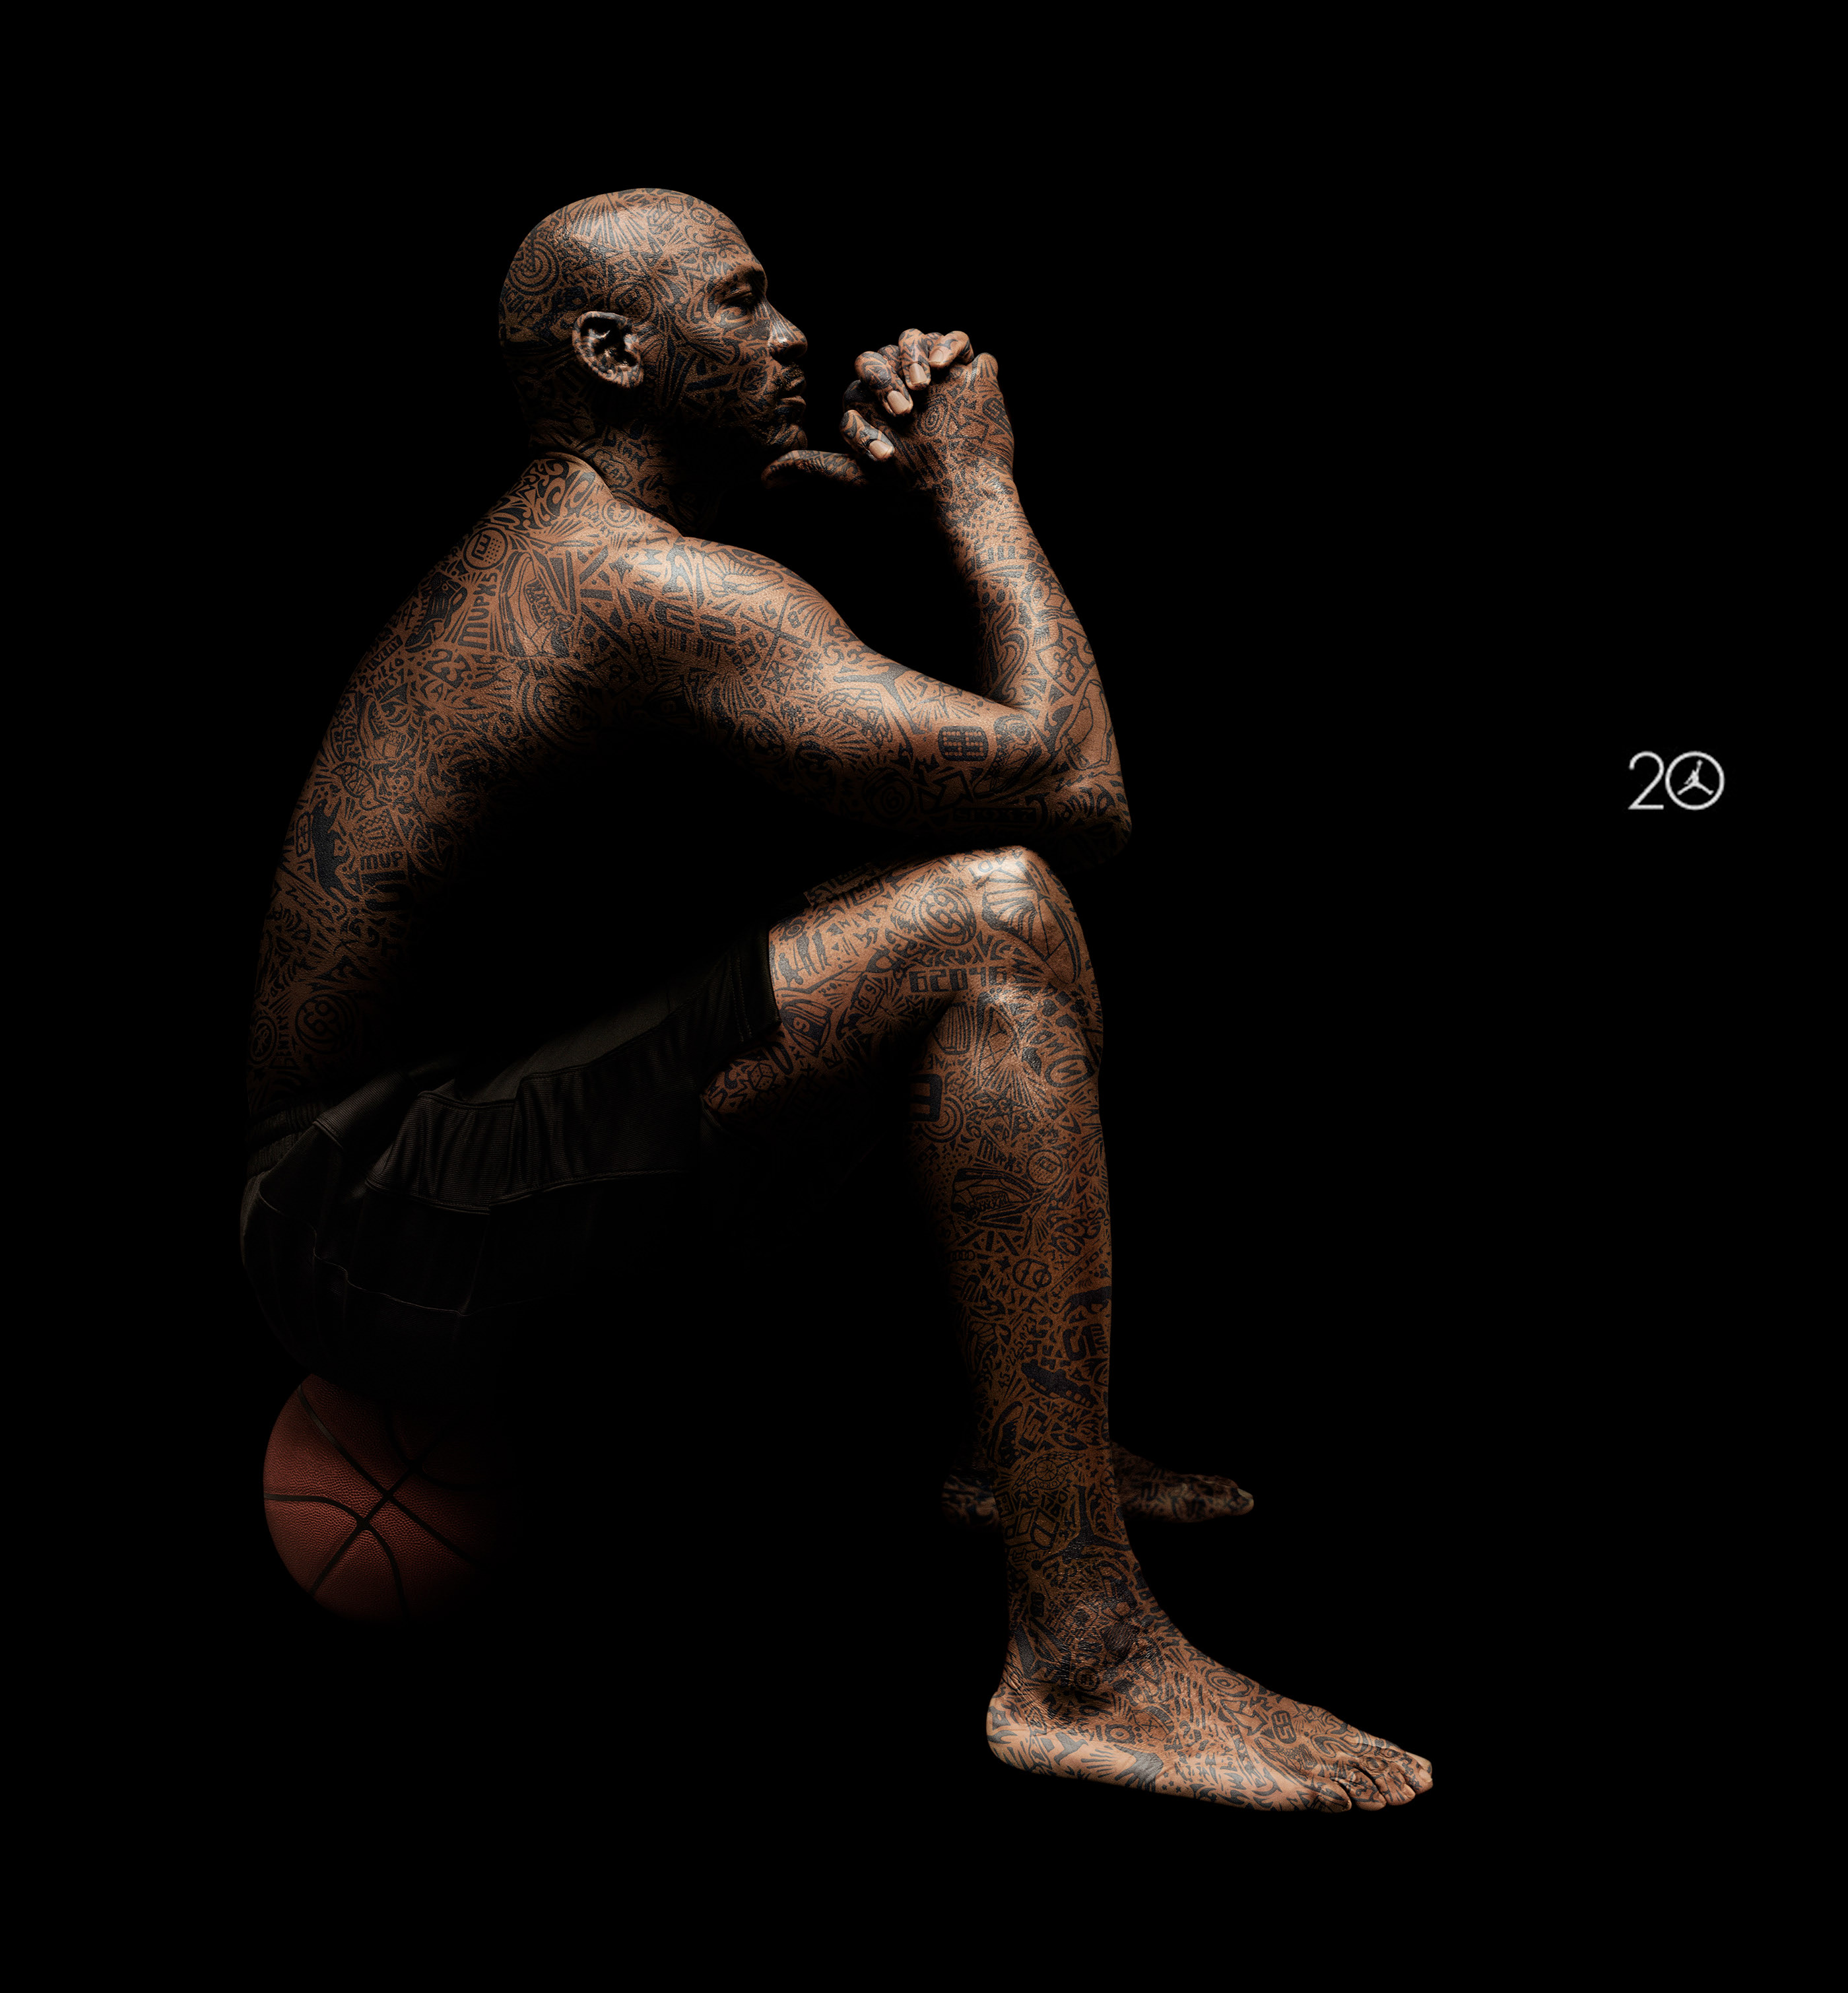 People 2800x3019 Michael Jordan Air Jordan simple background portrait display low light basketball